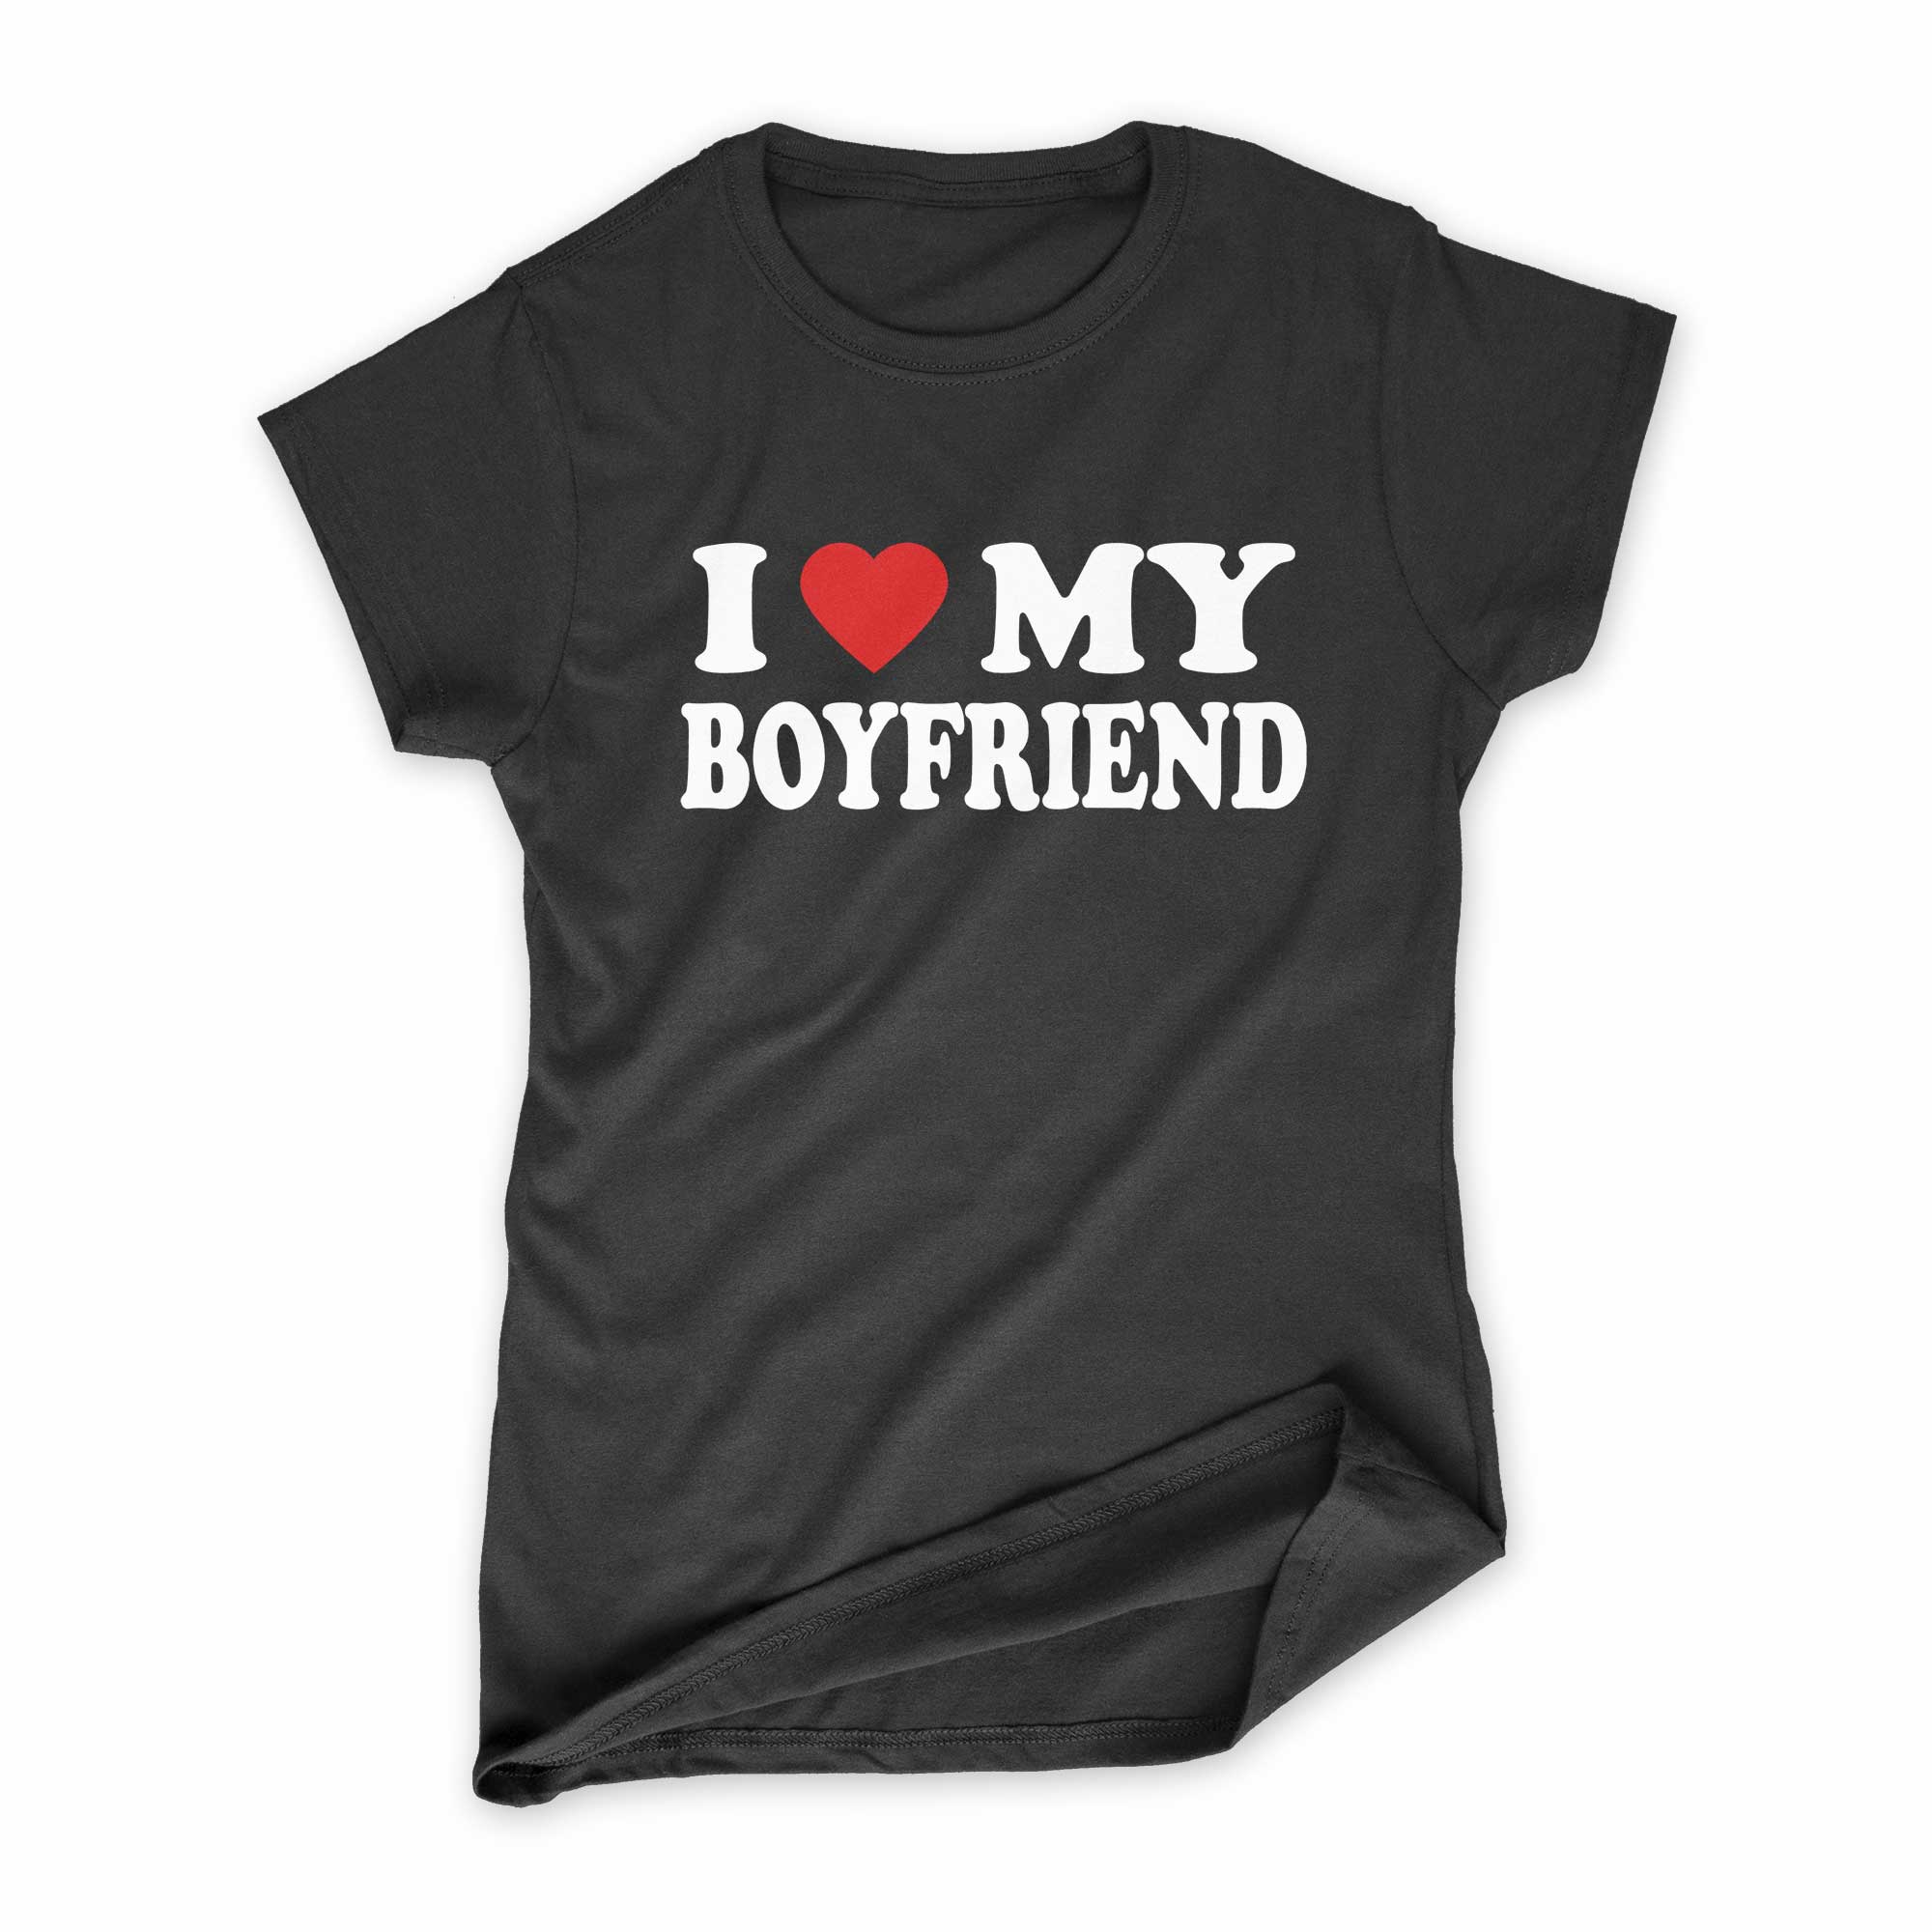 I Love My Boyfriend T-Shirt